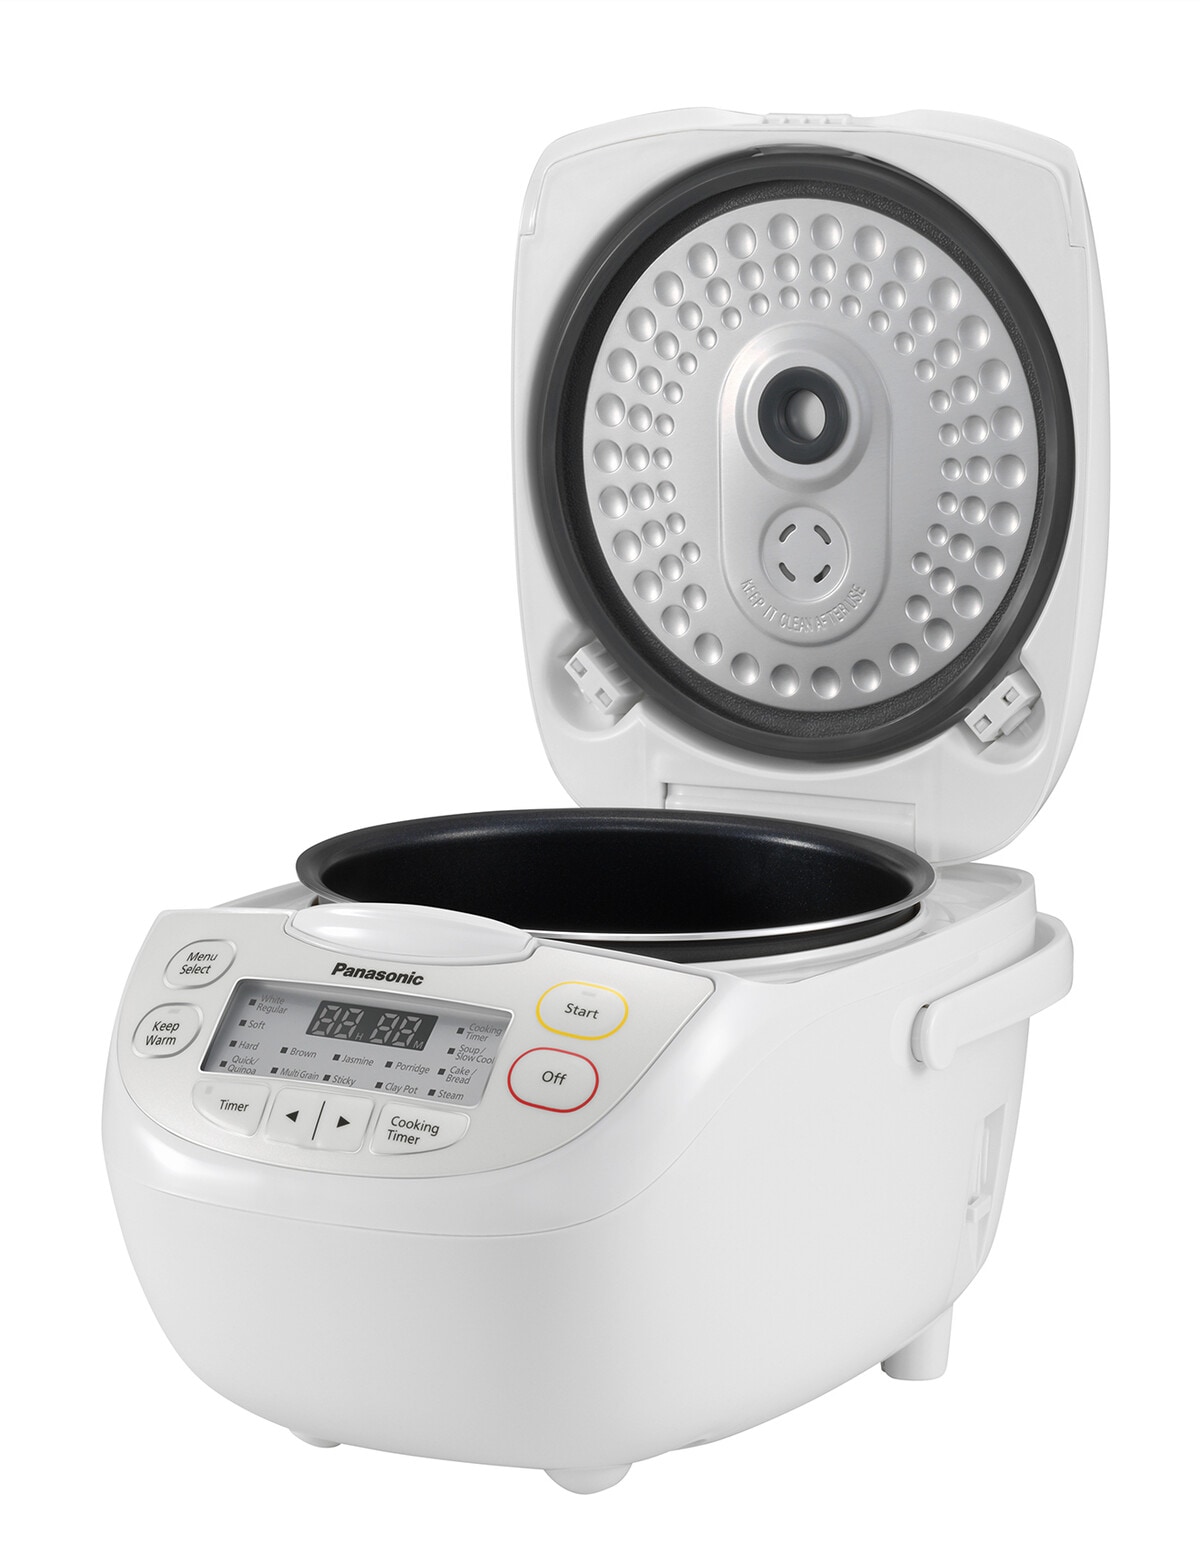 Panasonic Multi Rice Cooker, White, SR-CN188WST - Cooking